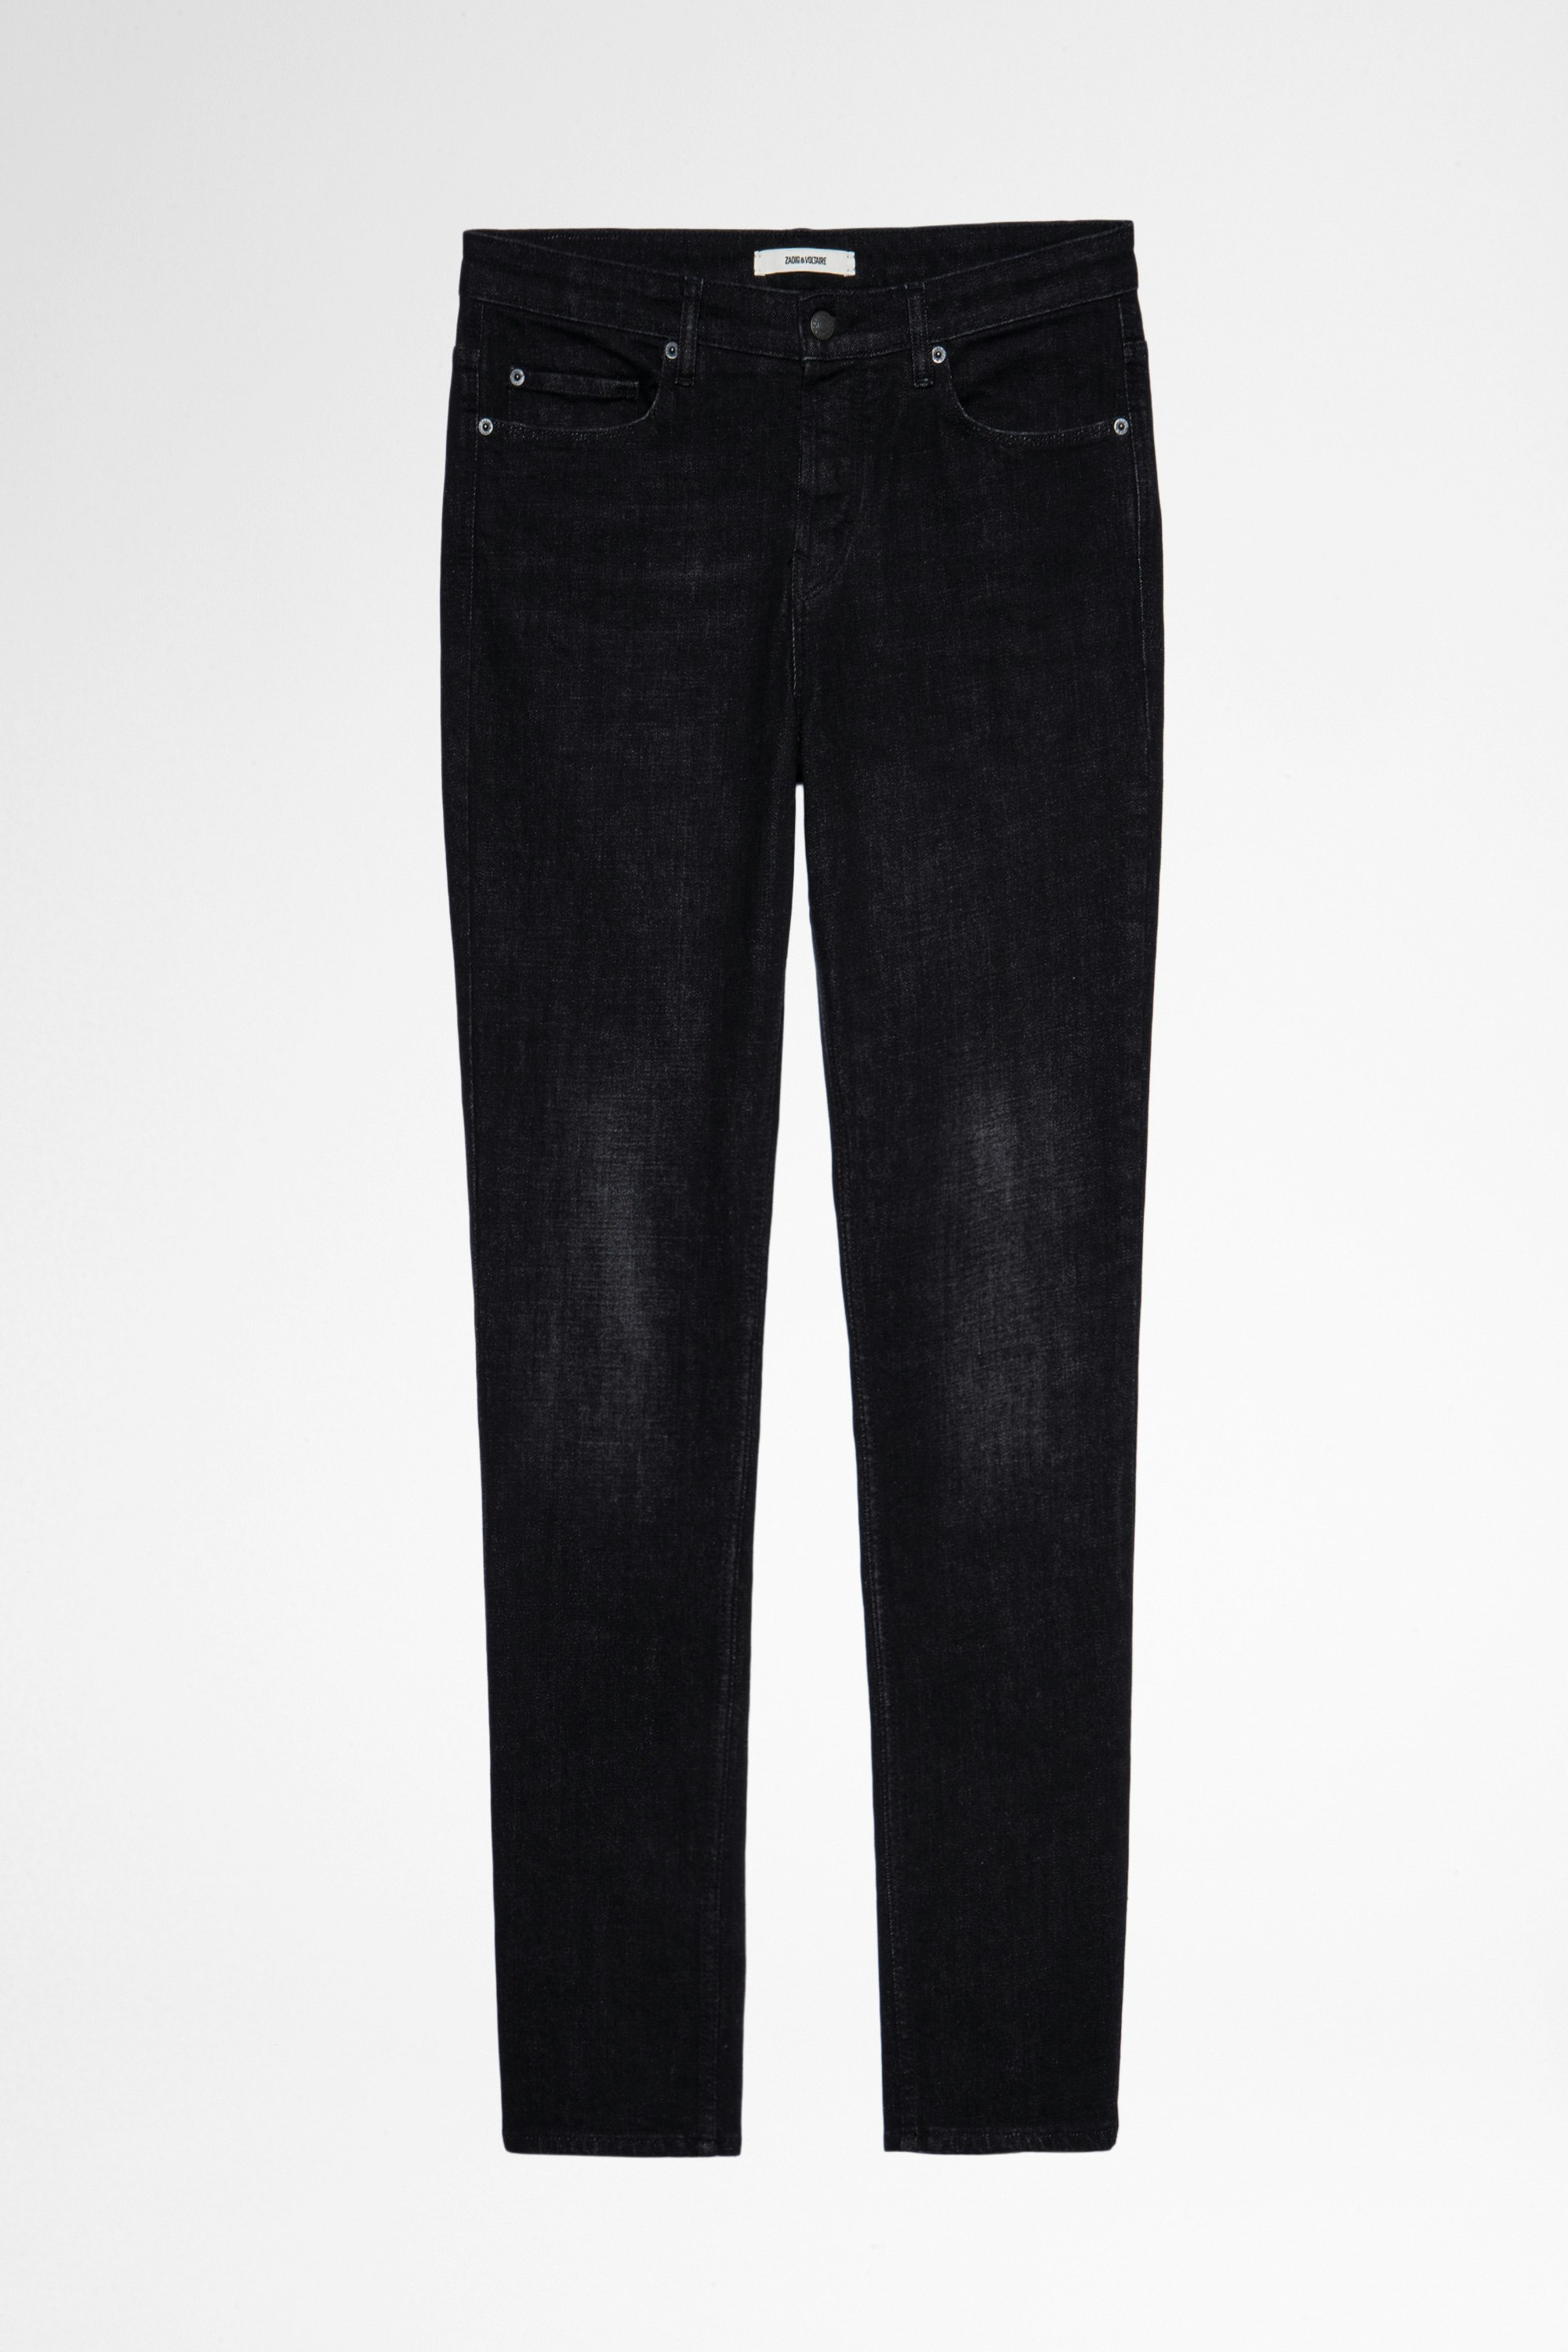 David Eco Jeans Men's gray eco jeans